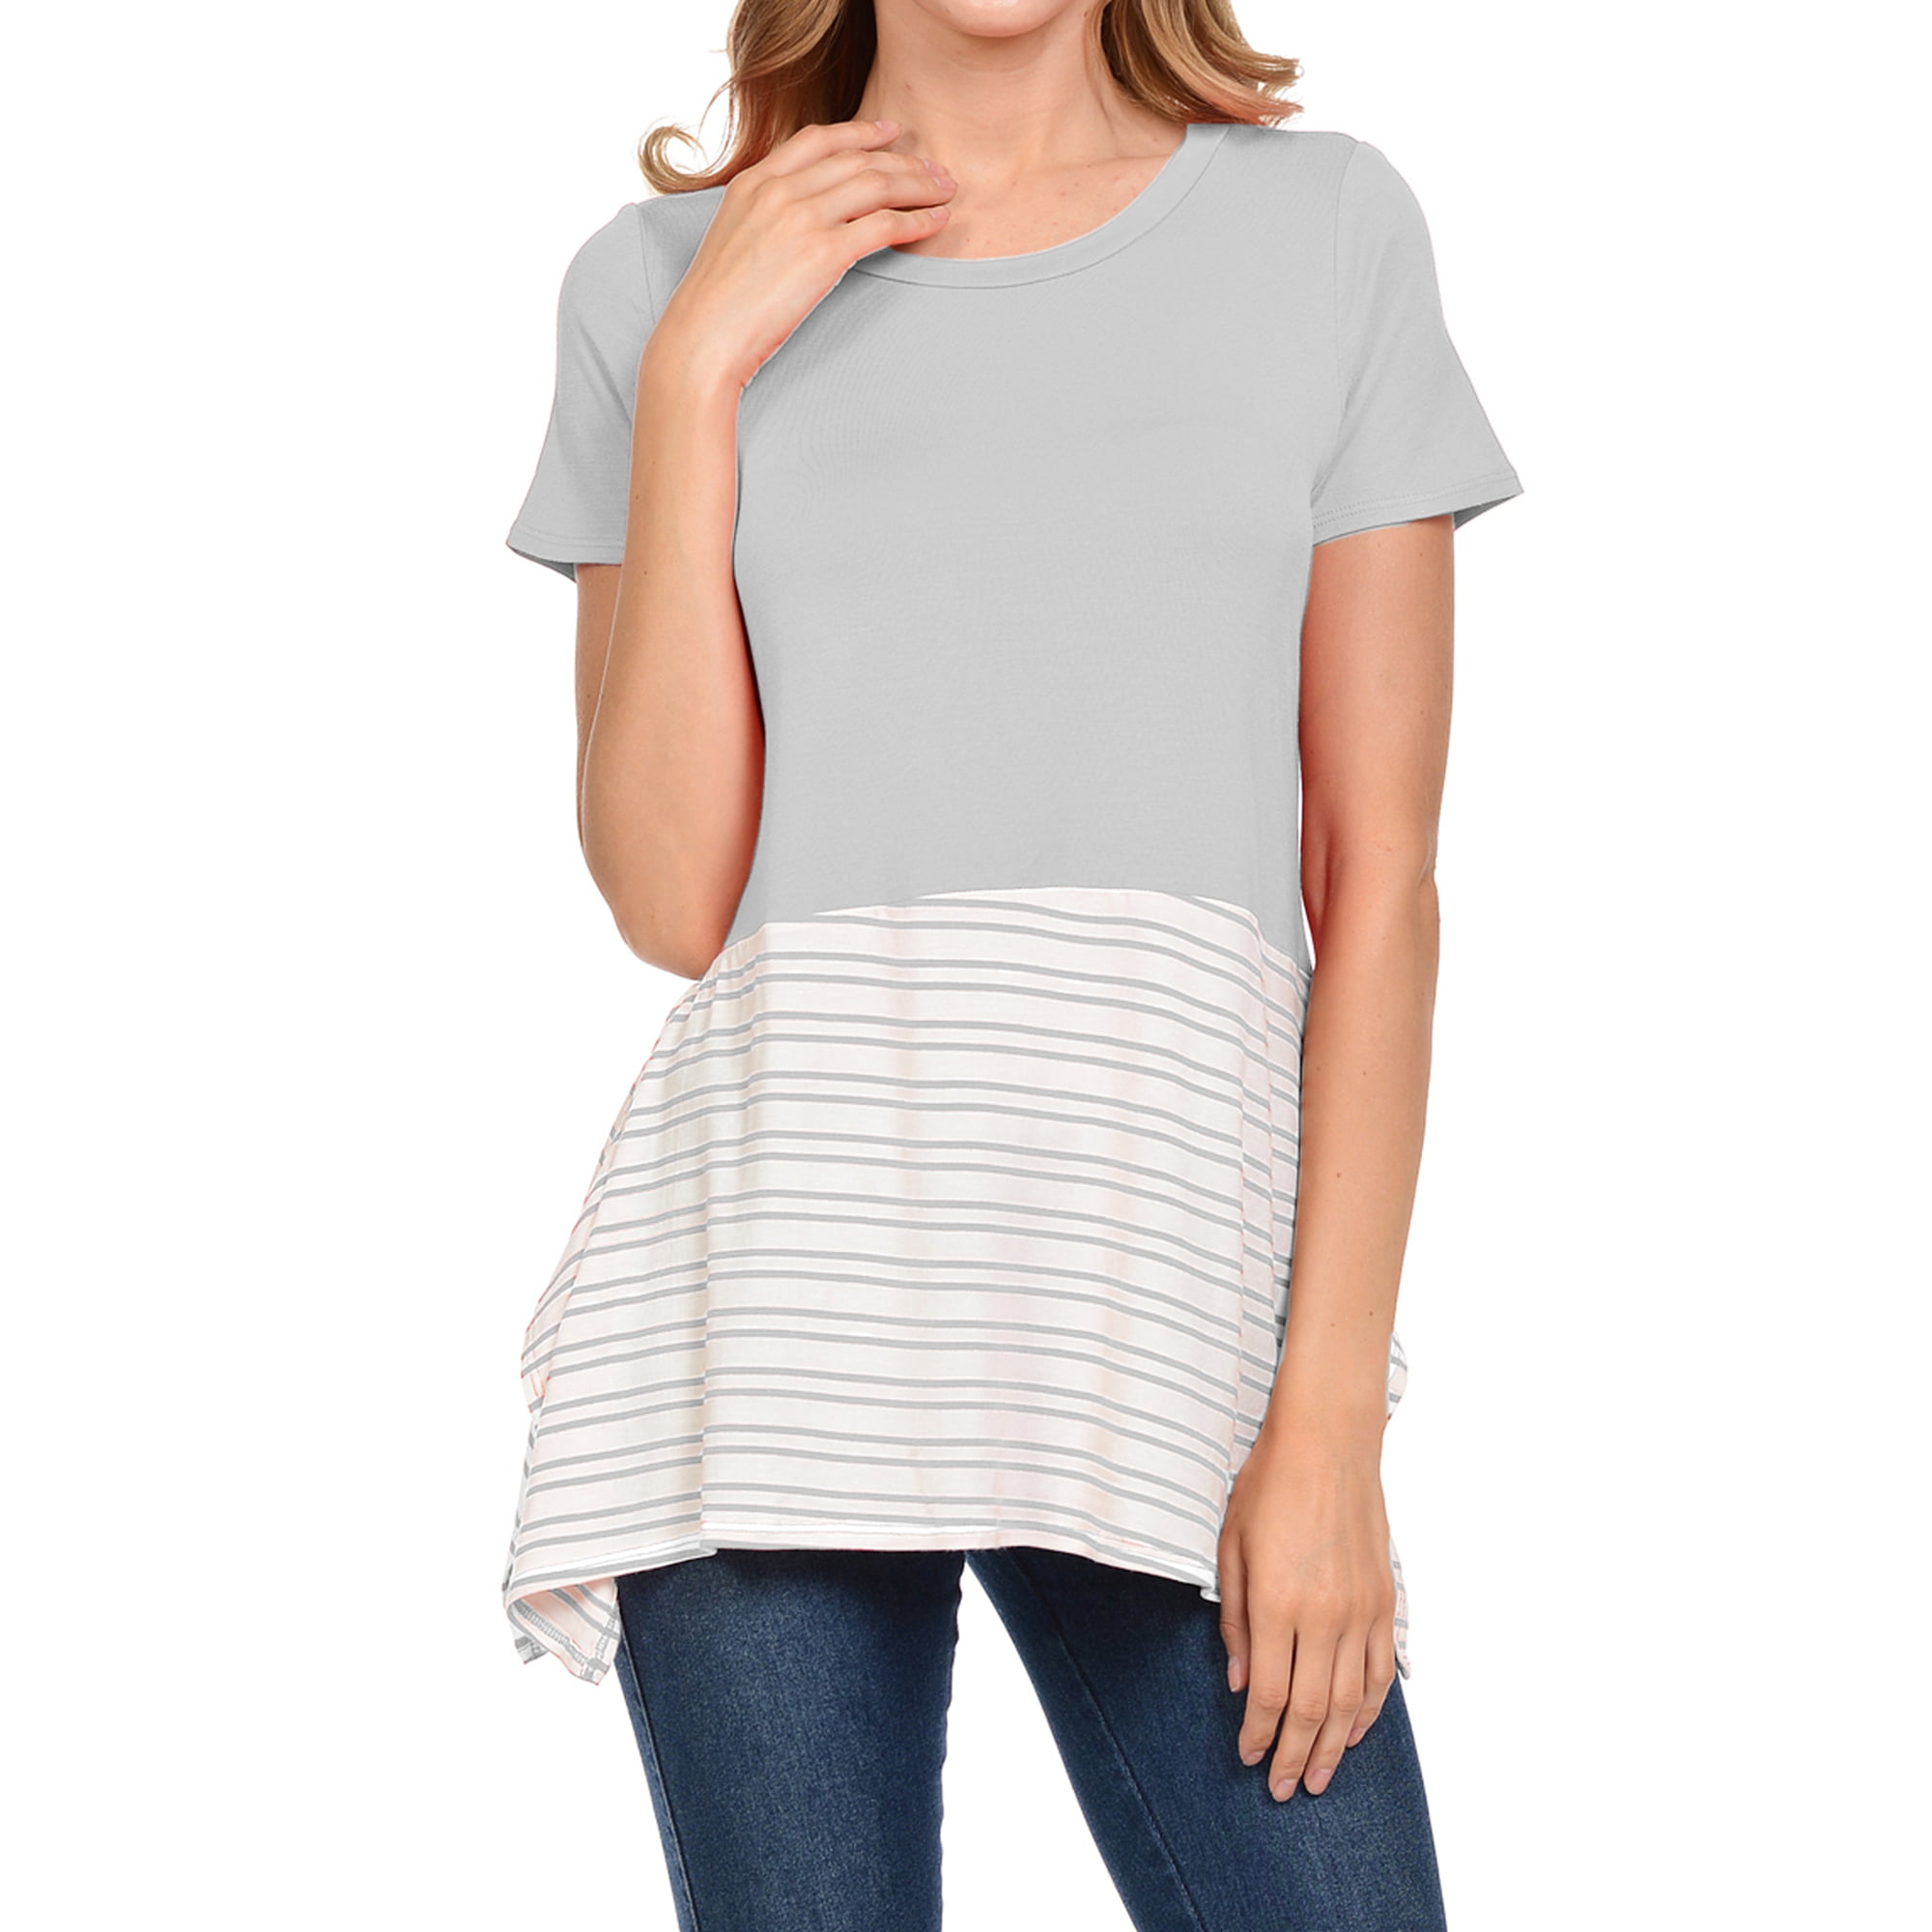 Chanyuhui Womens Long Sleeve Striped Print Color Block Patchwork T-Shirt Tops Casual Knitting Blouses Shirts Tunics 